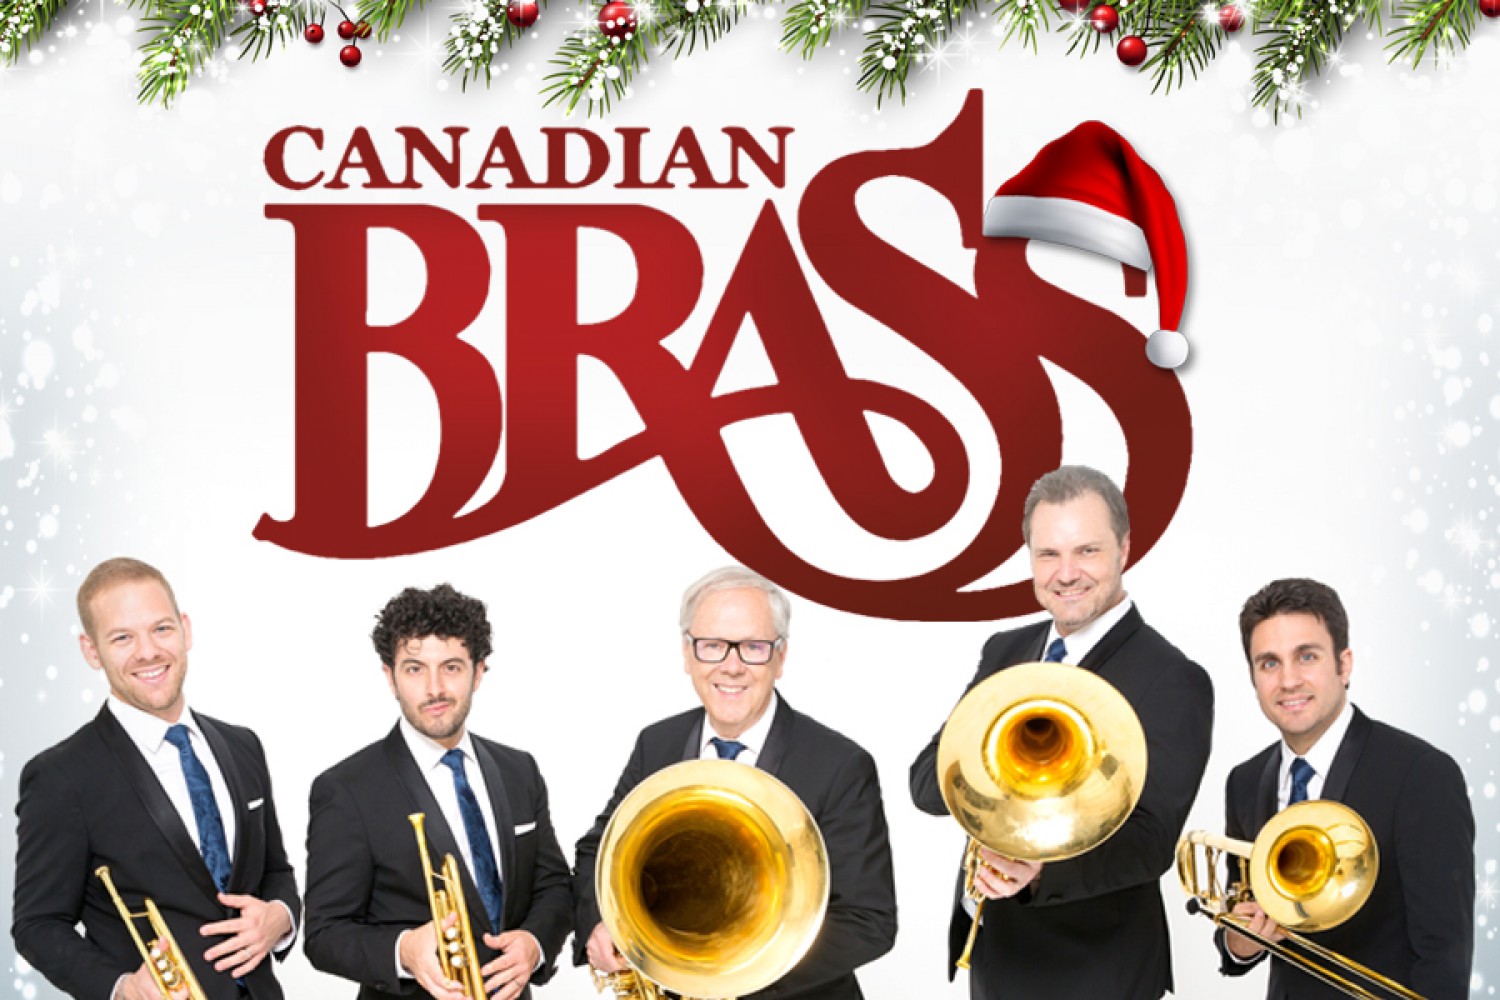 Canadian Brass Dixieland Classics Brass Ensemble Series by